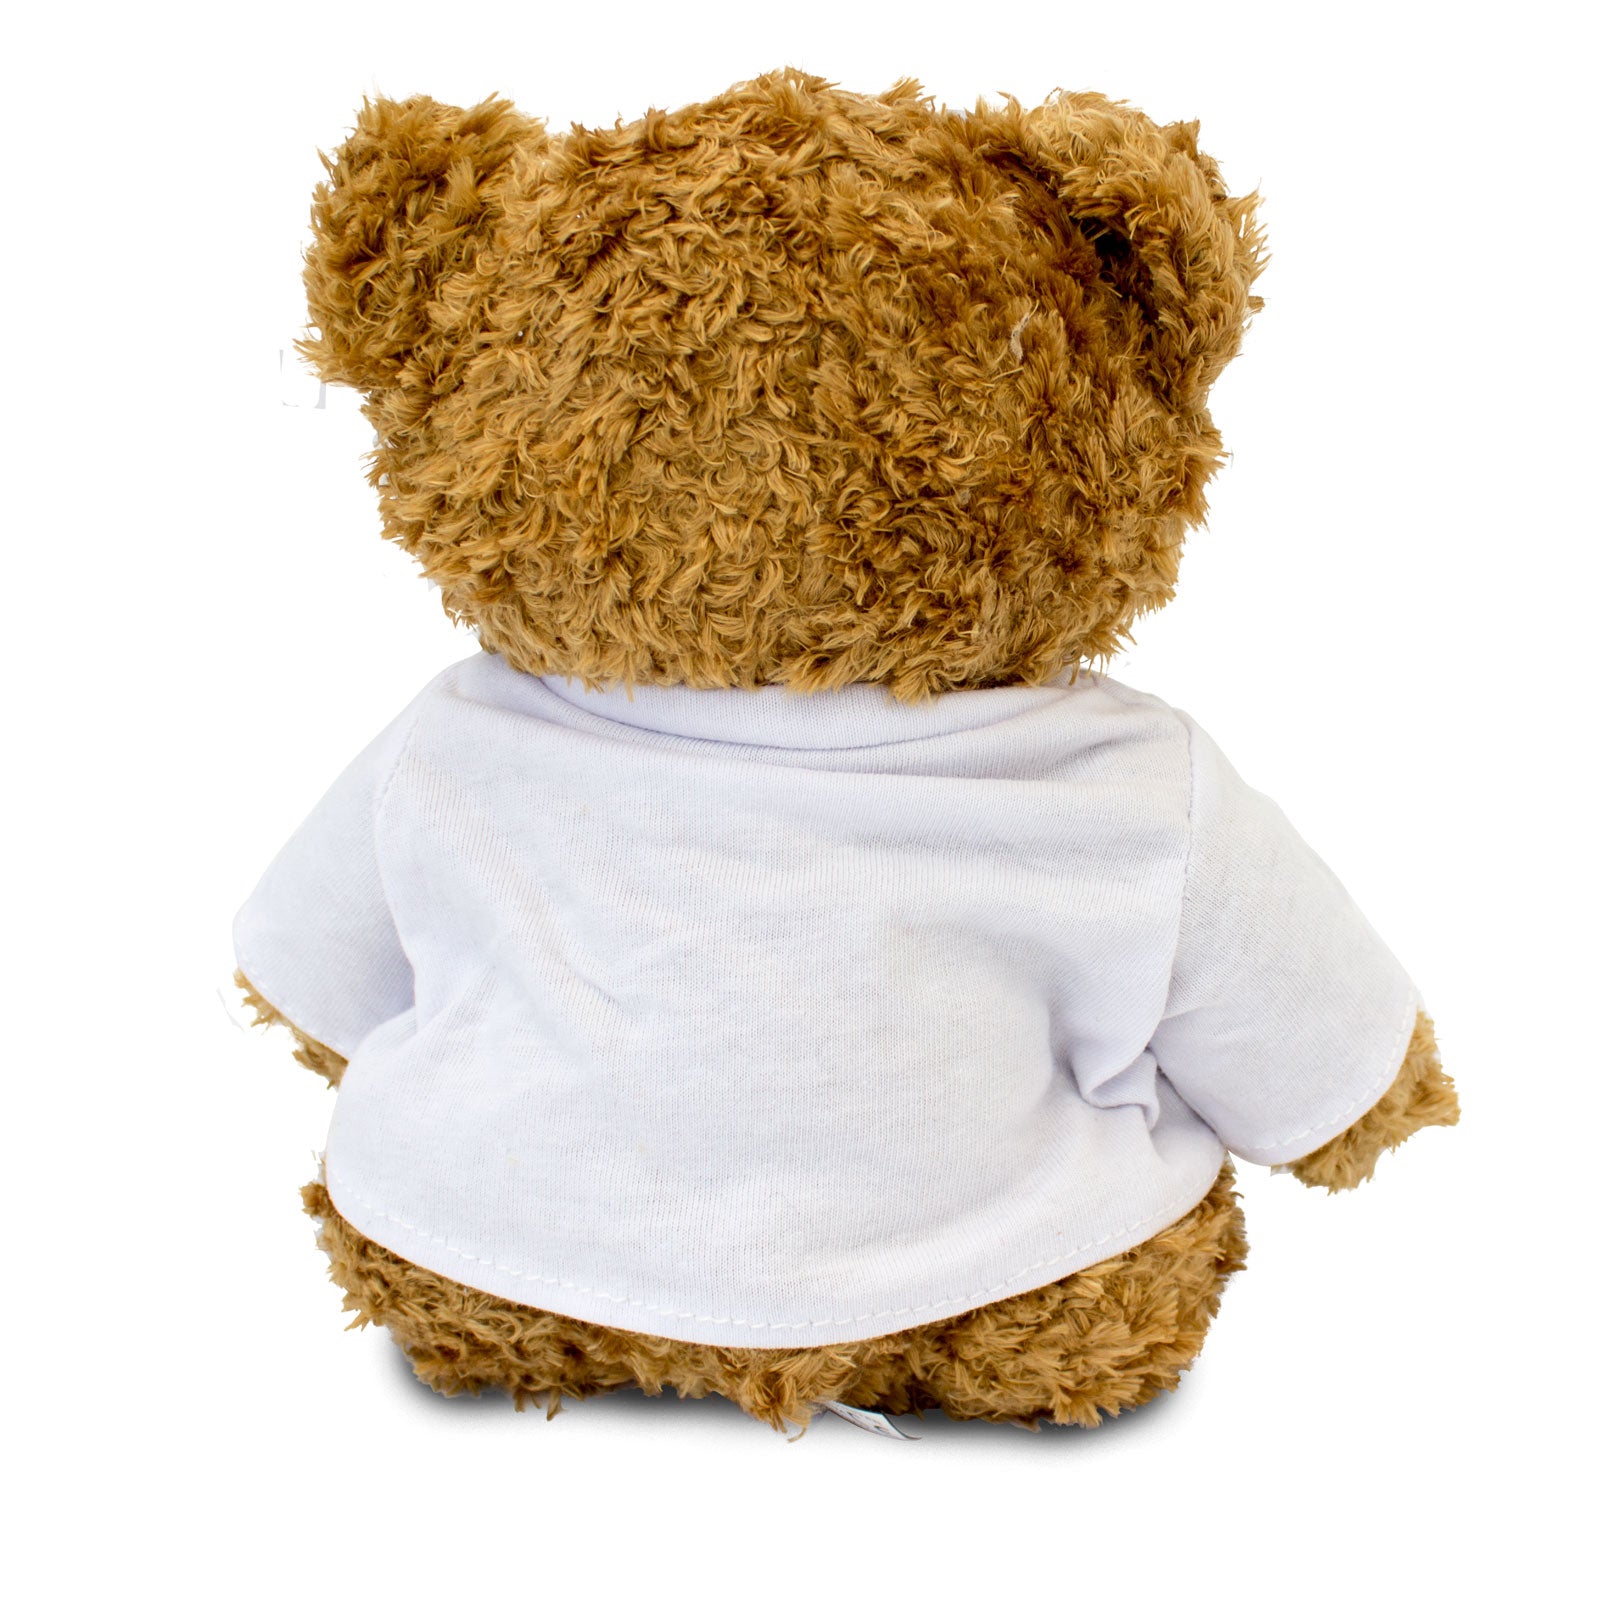 Get Well Soon Jeremiah - Teddy Bear